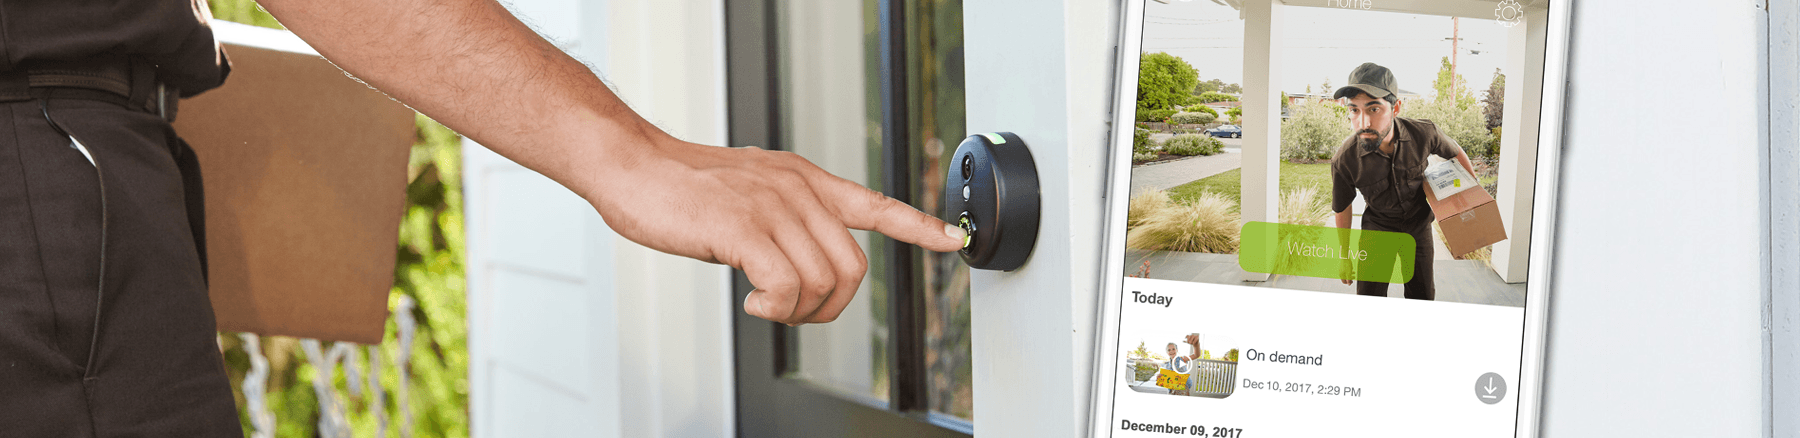 A doorbell camera alert on smart phone